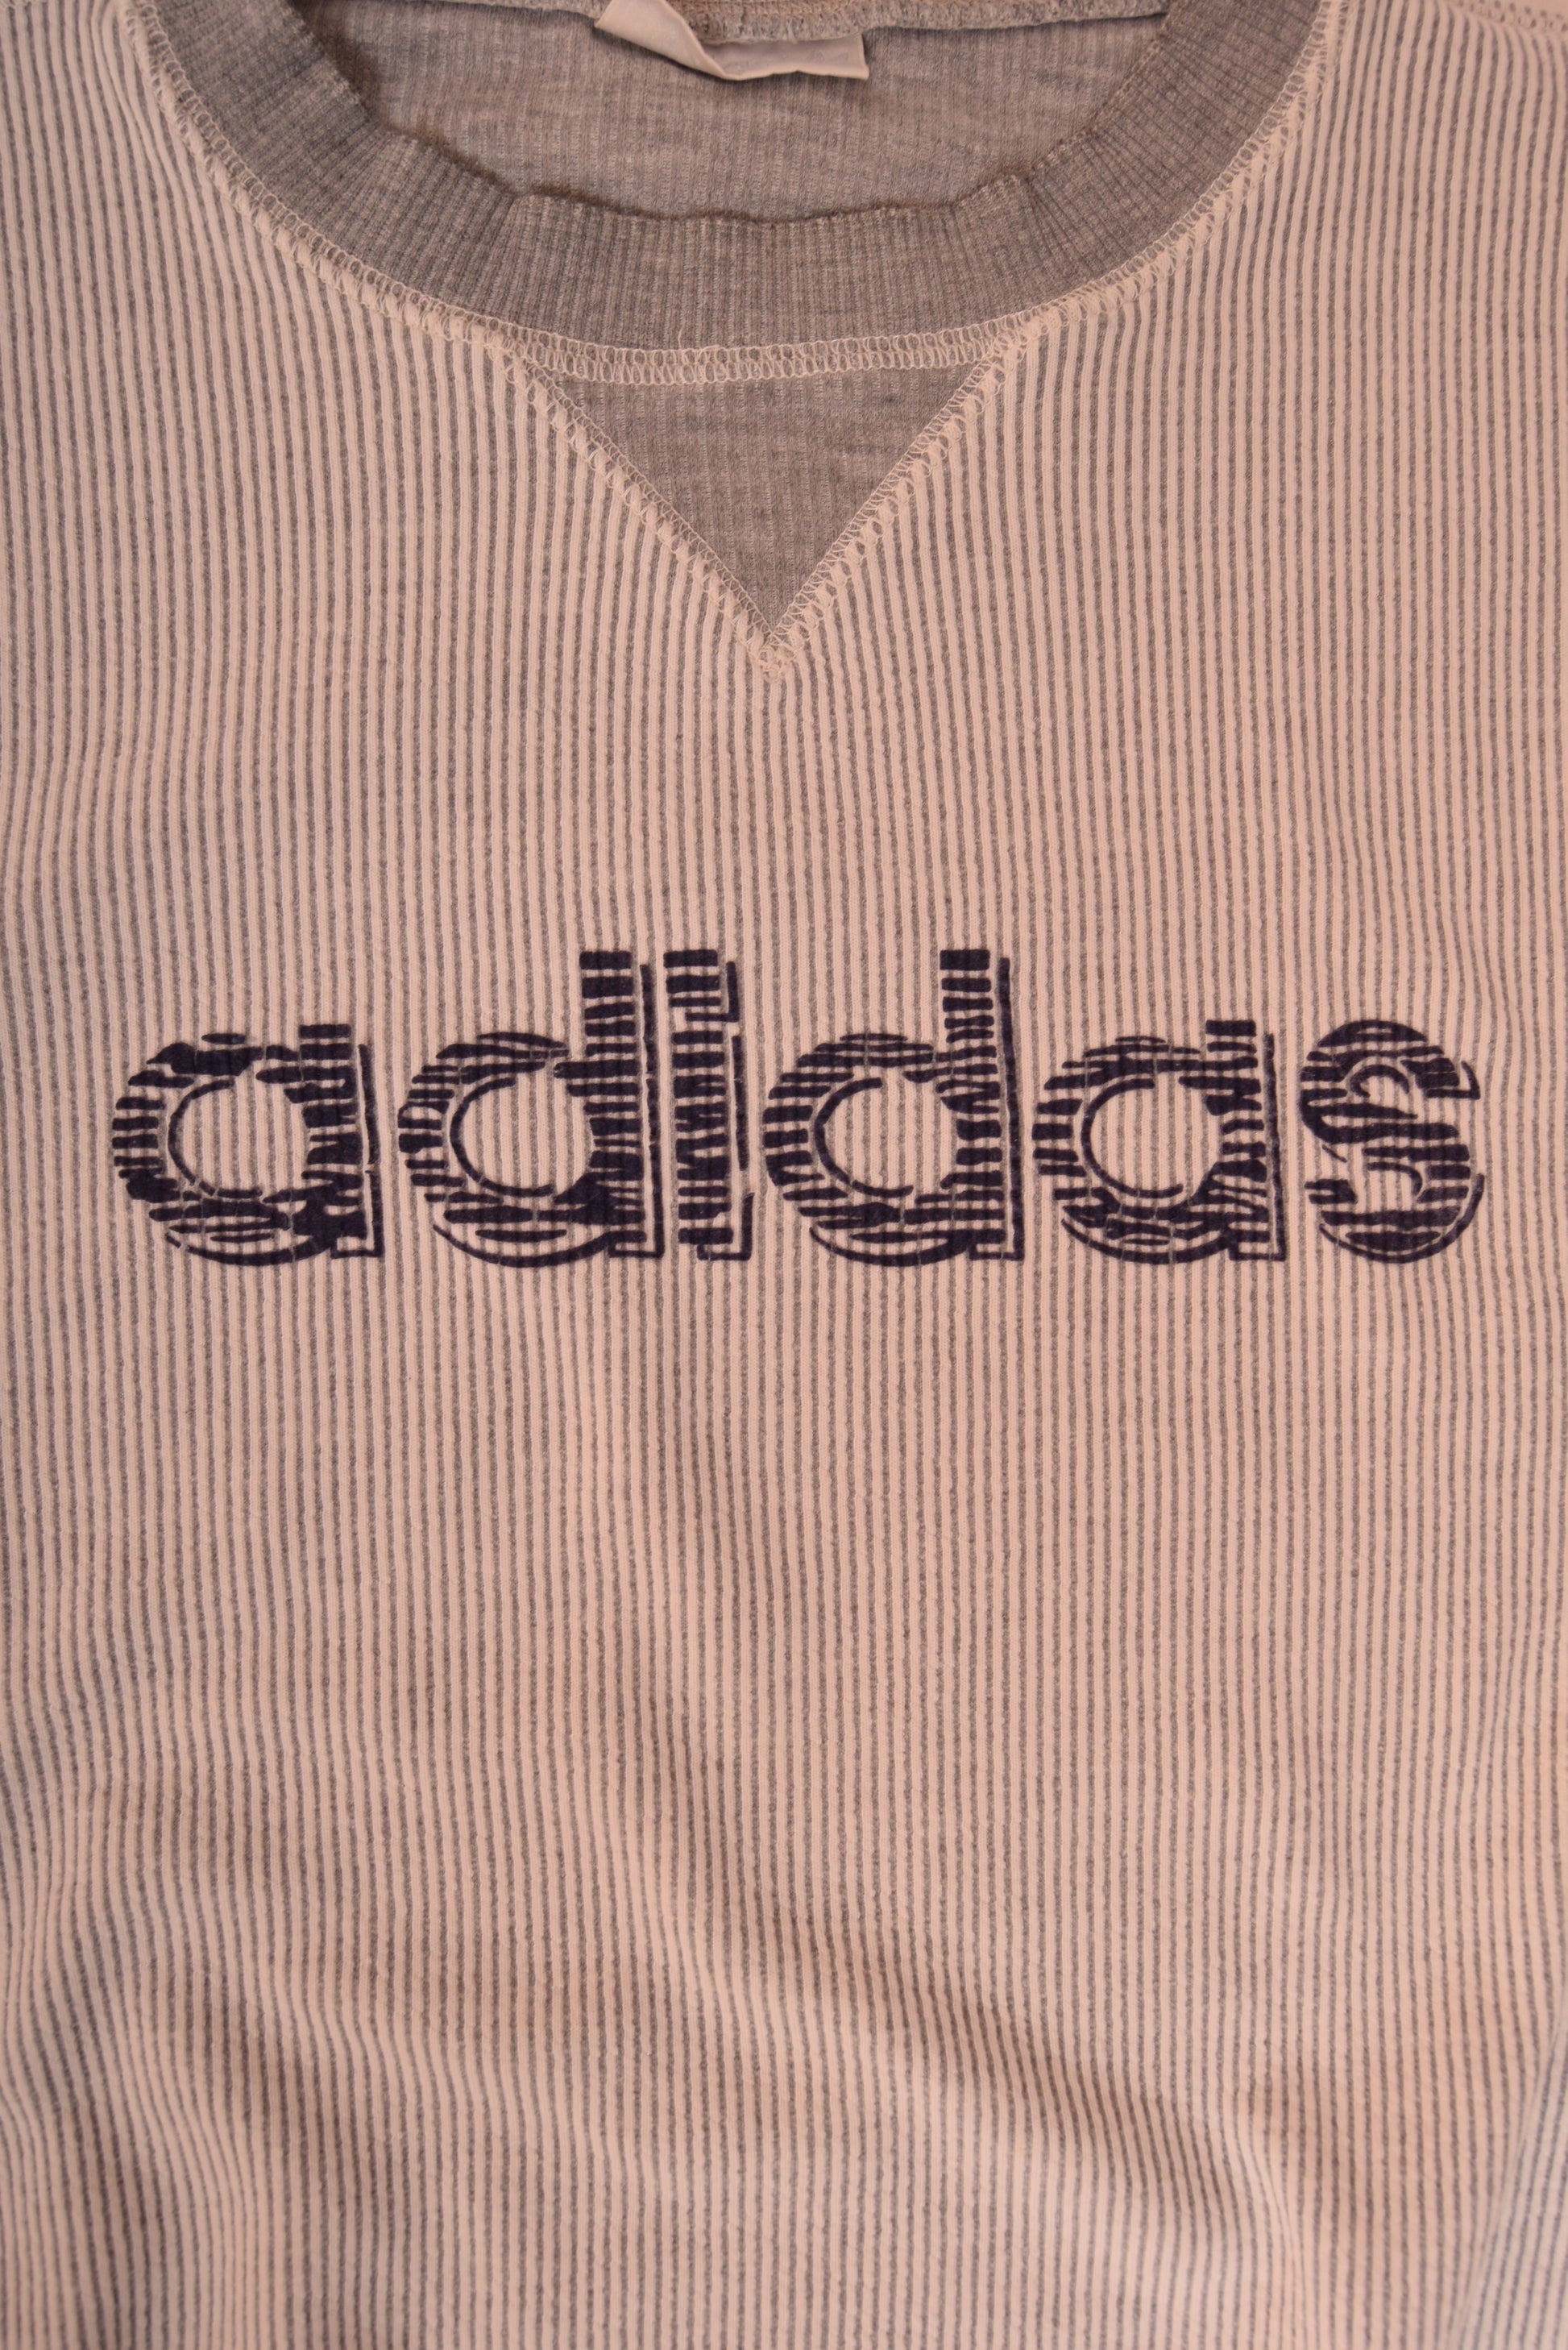 Vintage 90's Adidas Sweatshirt Crew Neck Grey Size L-XL